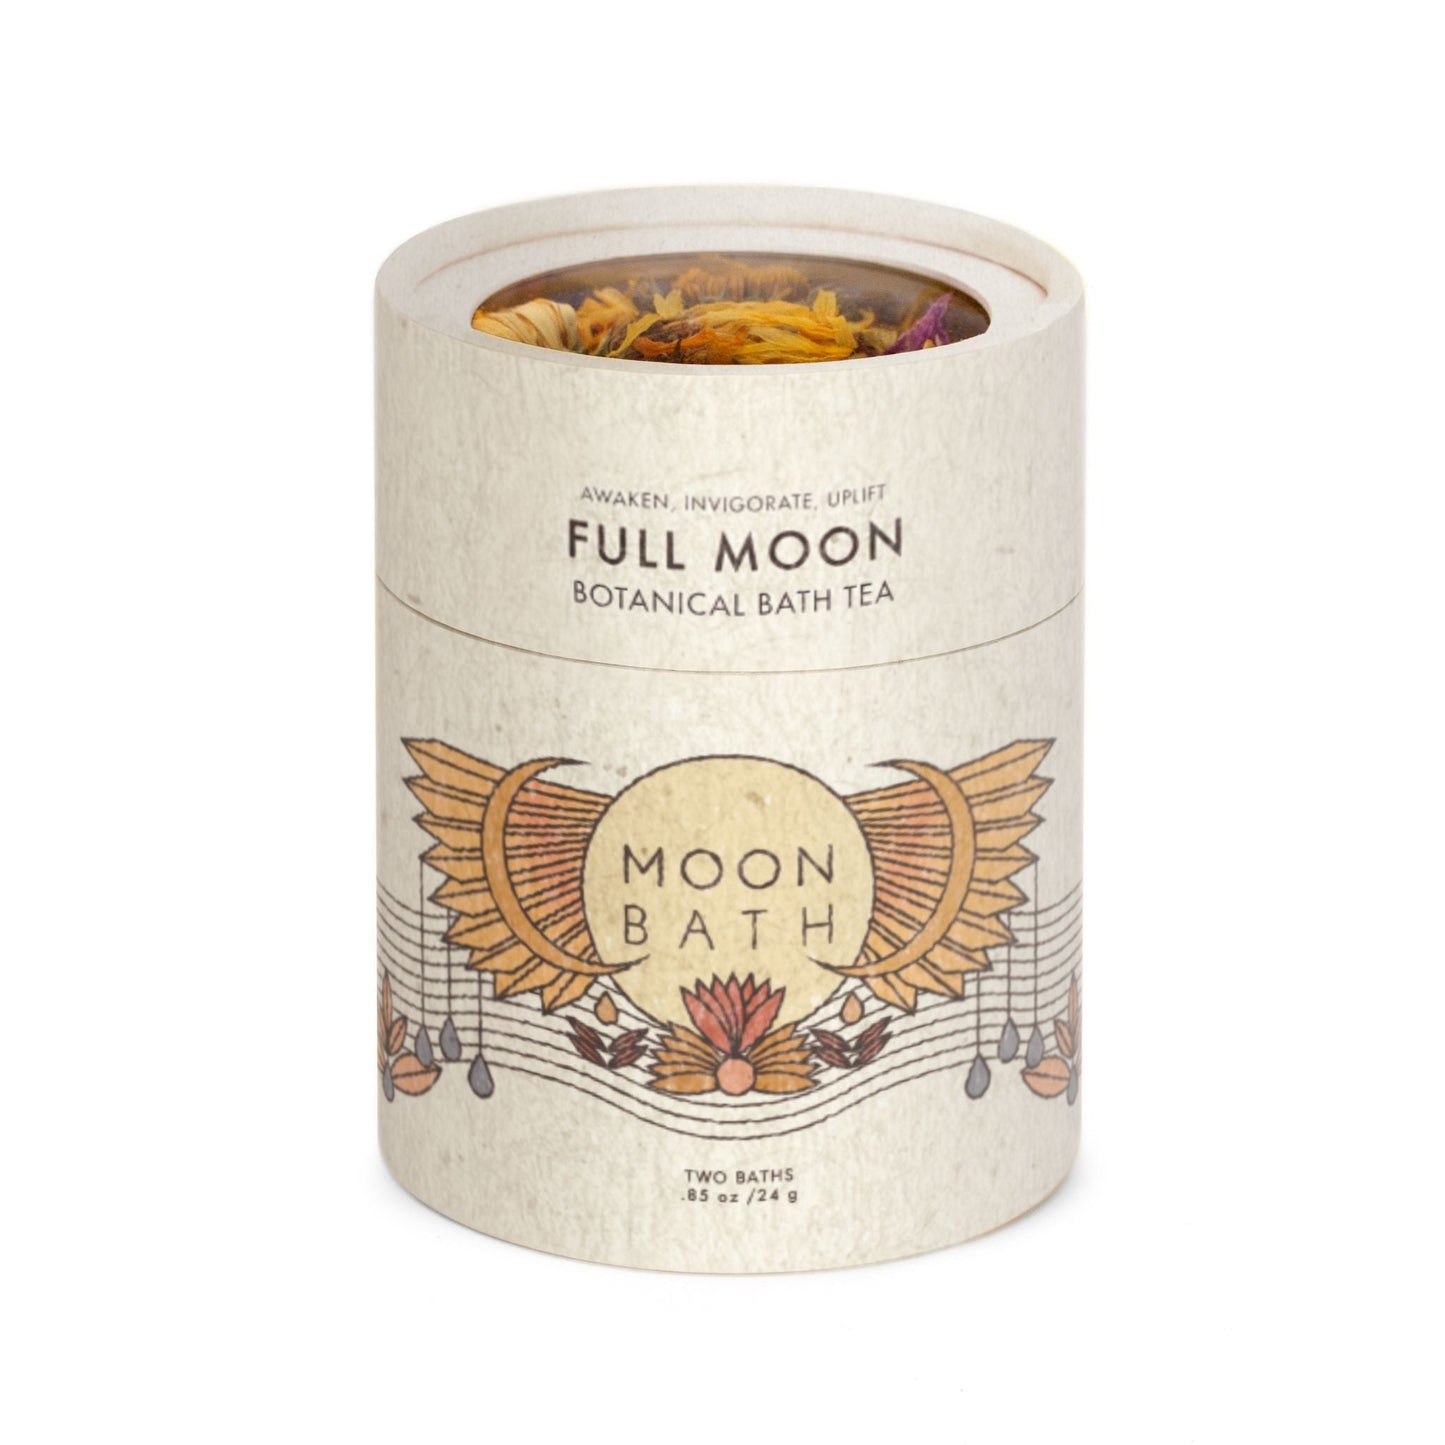 Full Moon by Moon Bath